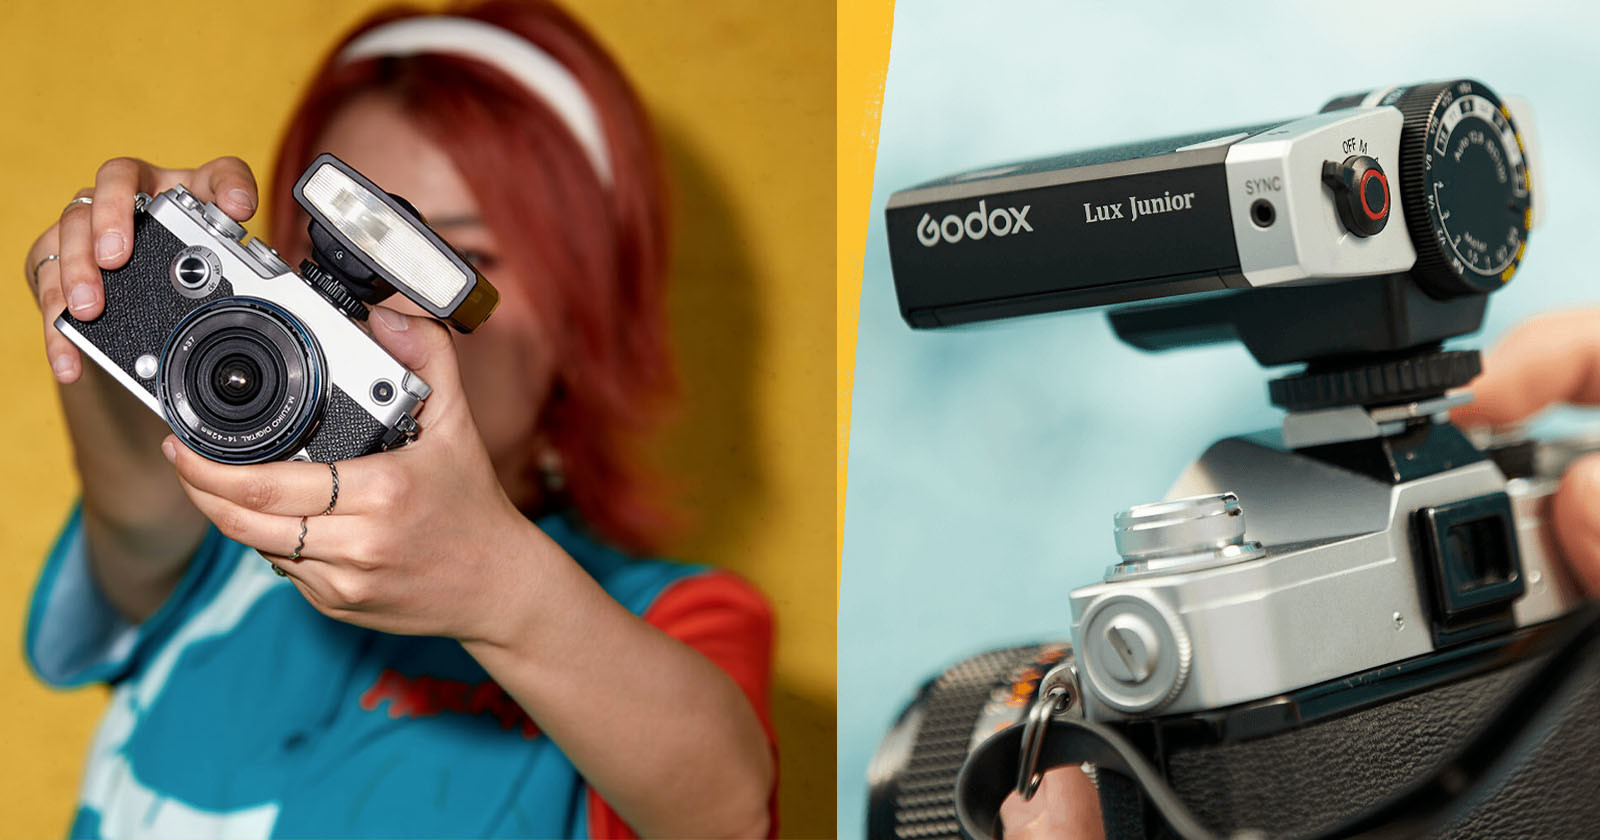  godox lux junior retro-inspired on-camera flash 